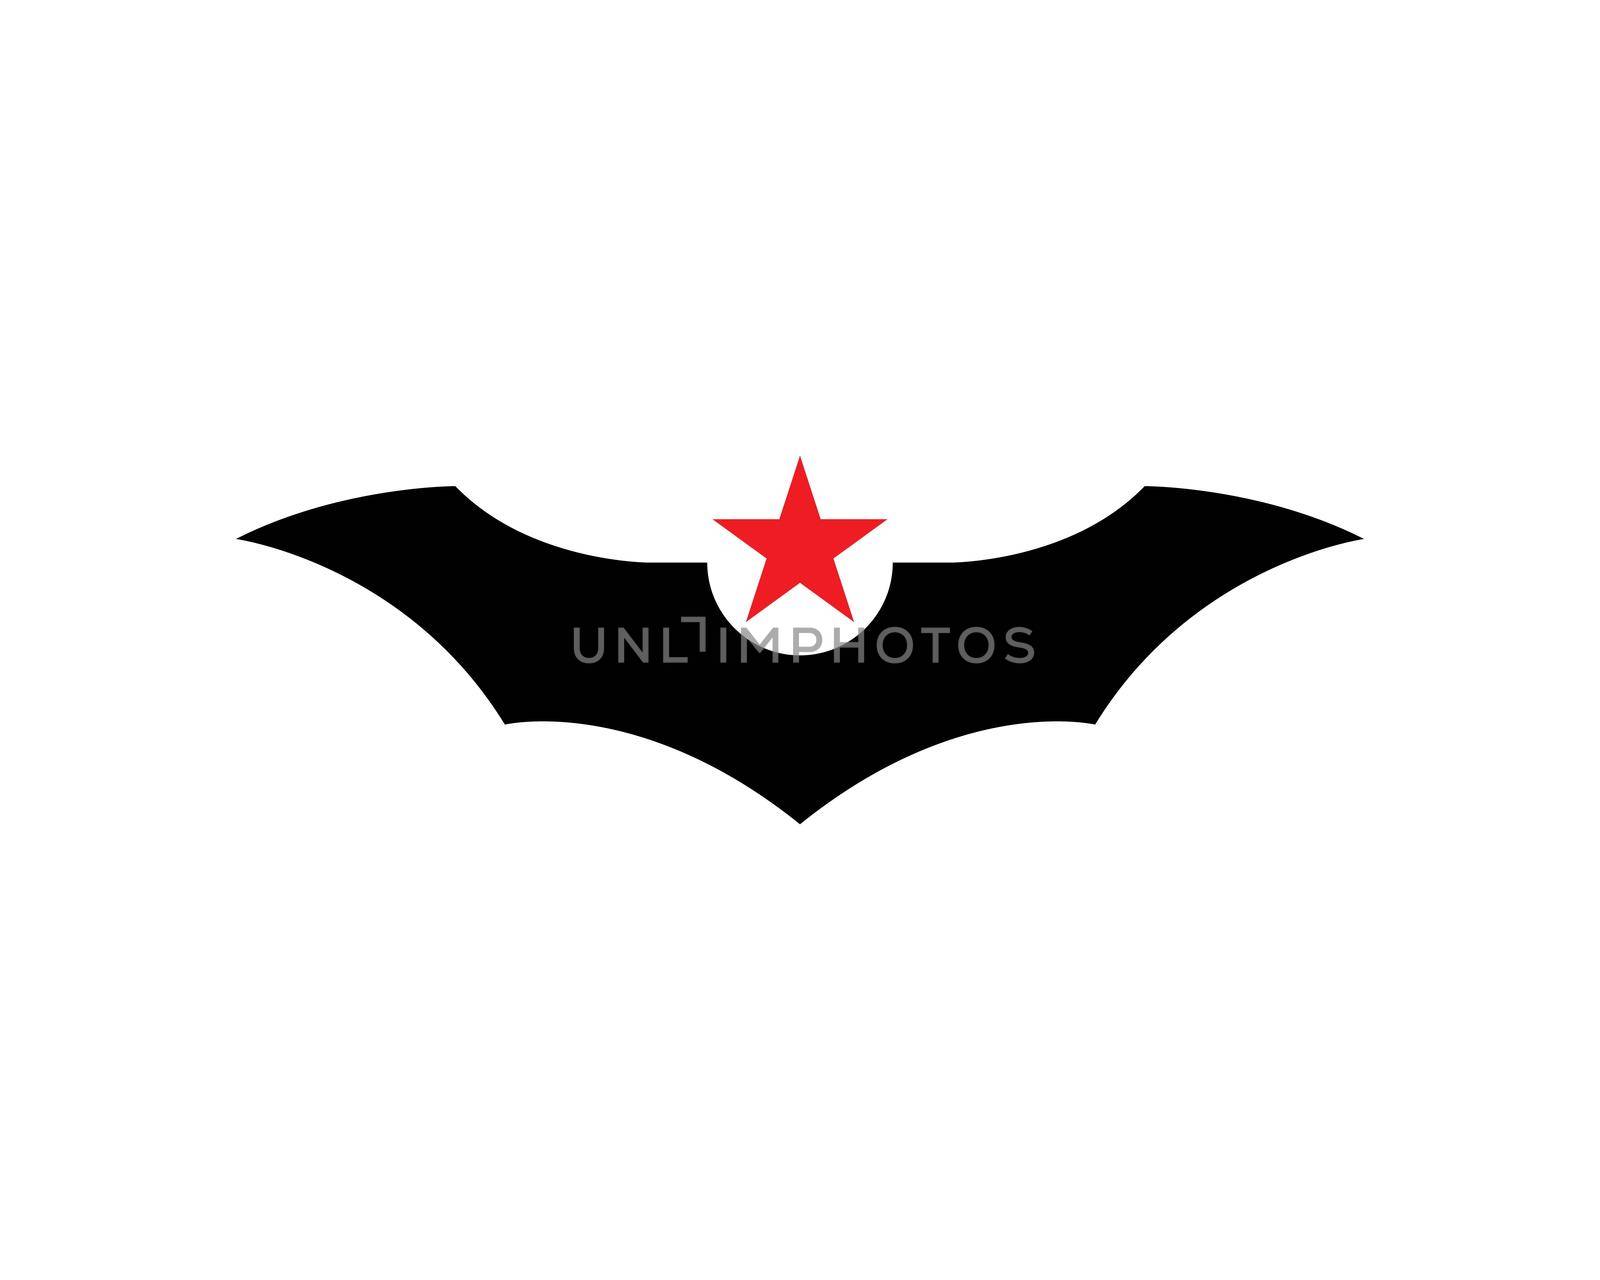 Bat ilustration logo vector by awk